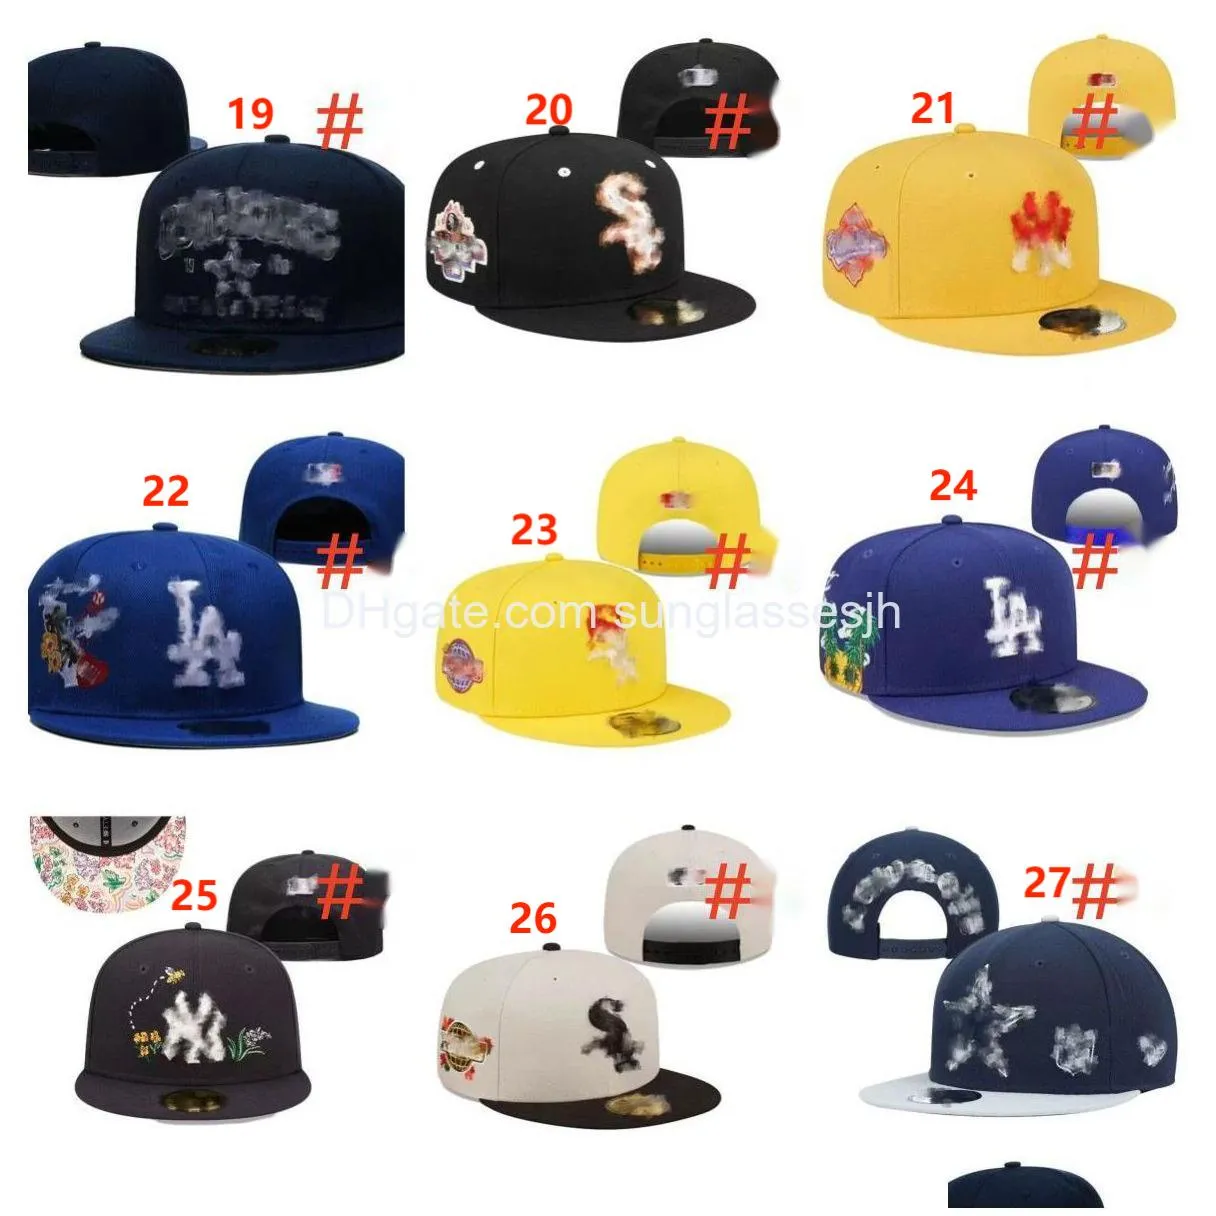 Ball Caps Top Quality Snapbacks Fitted Hats Embroidery Football Baskball Visors Cotton Letter Mesh Flex Beanies Flat Hat Hip Hop Spo